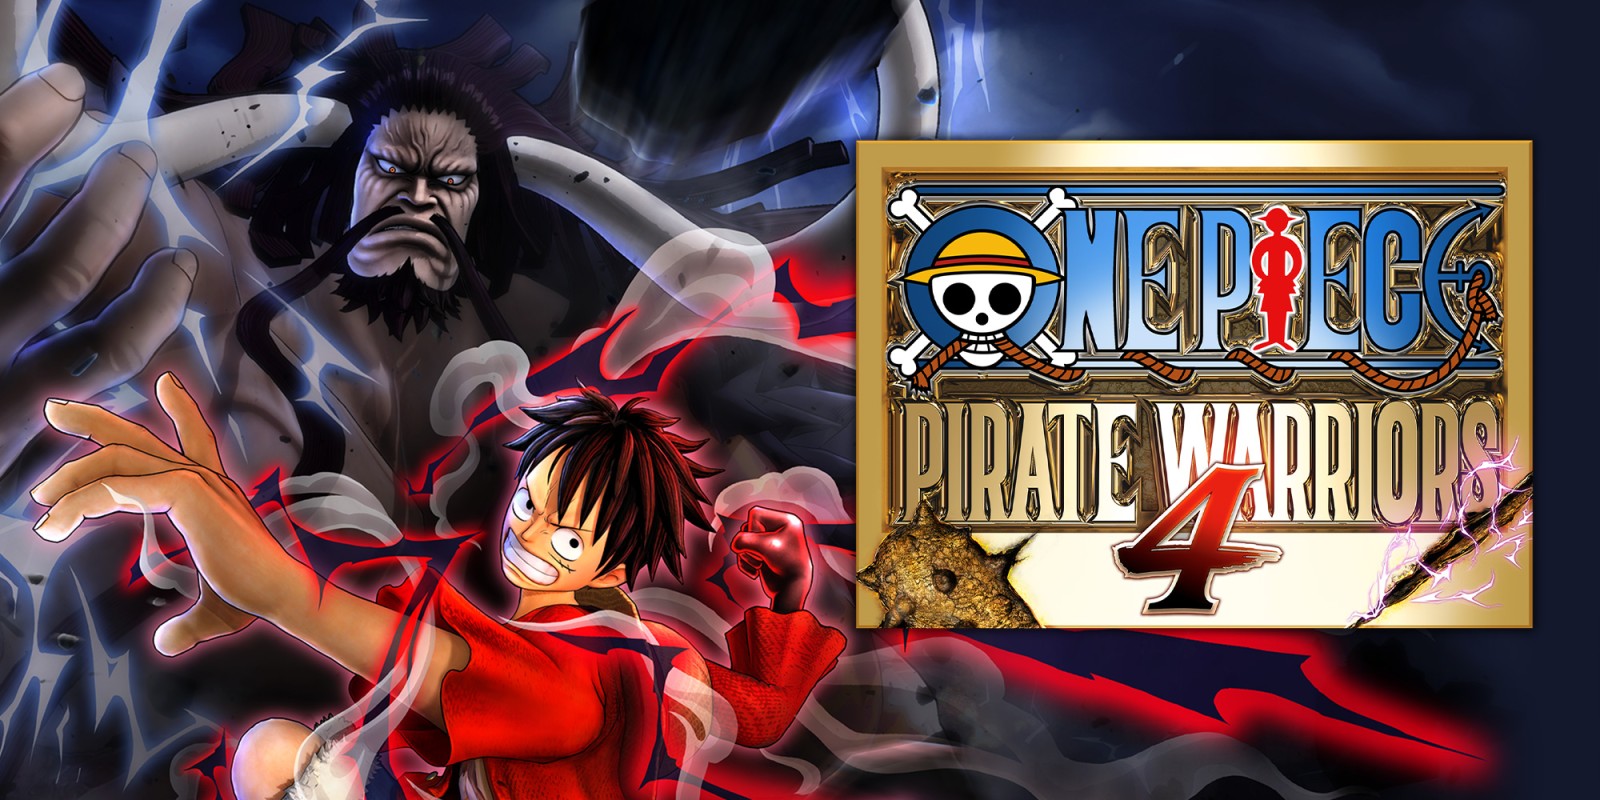 One Piece Pirate Warriors 4